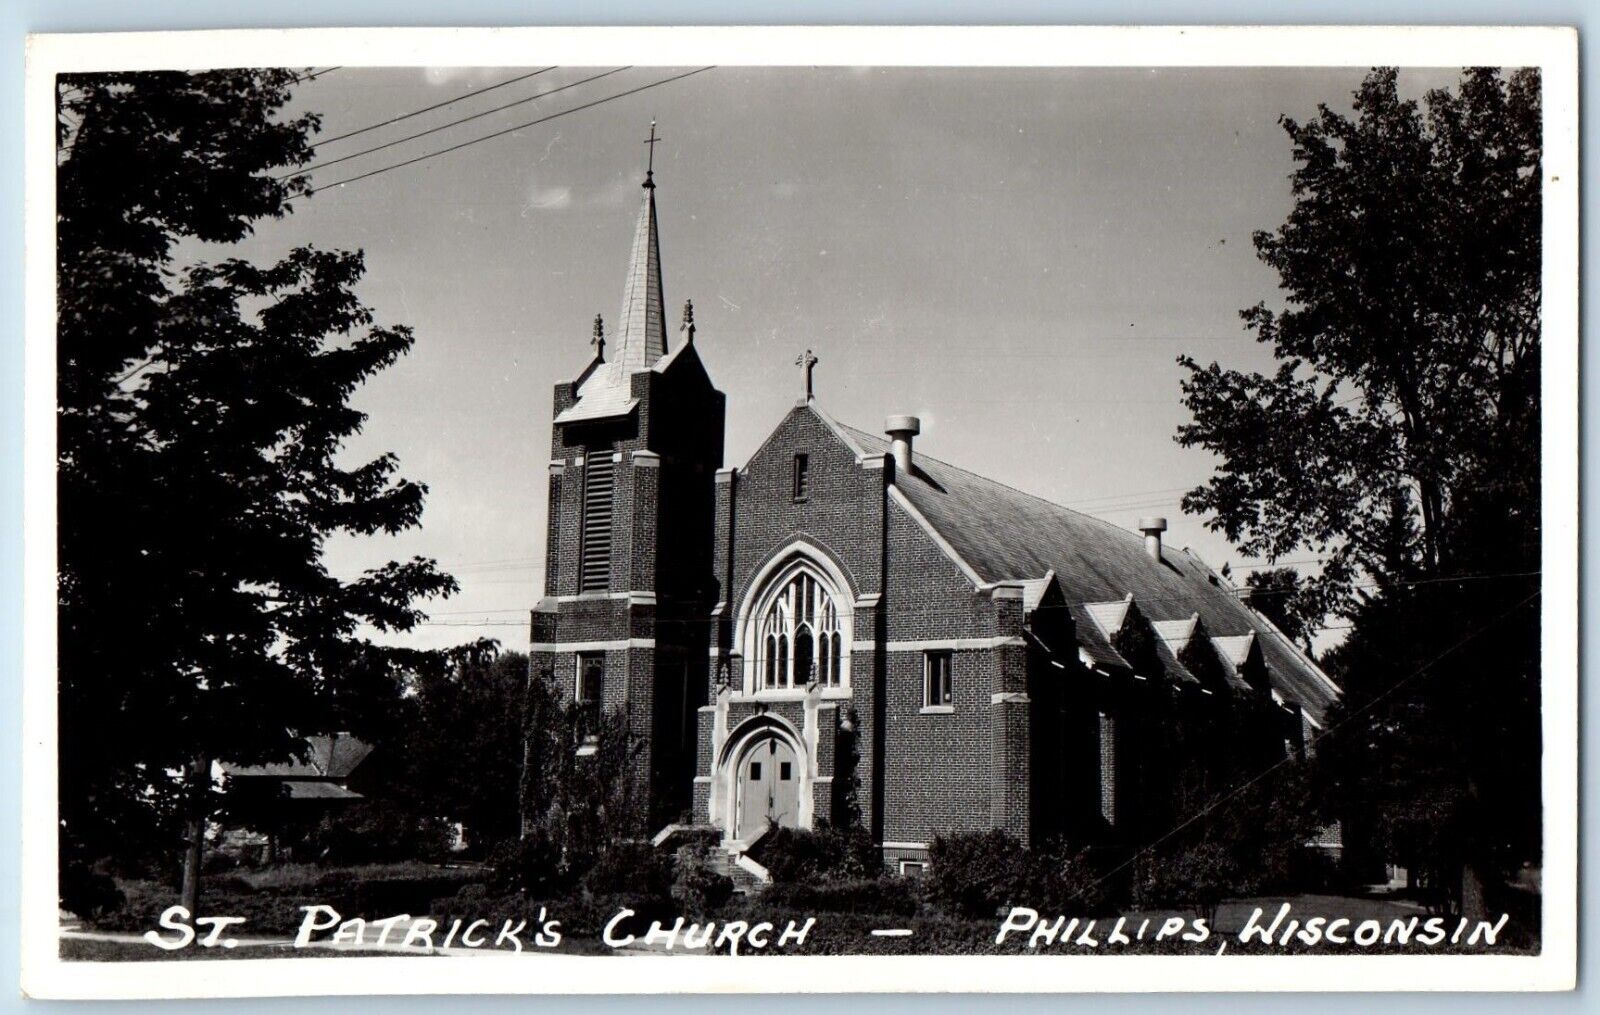 Phillips Wisconsin WI Postcard RPPC Photo St. Patrick's Church c1940's Vintage